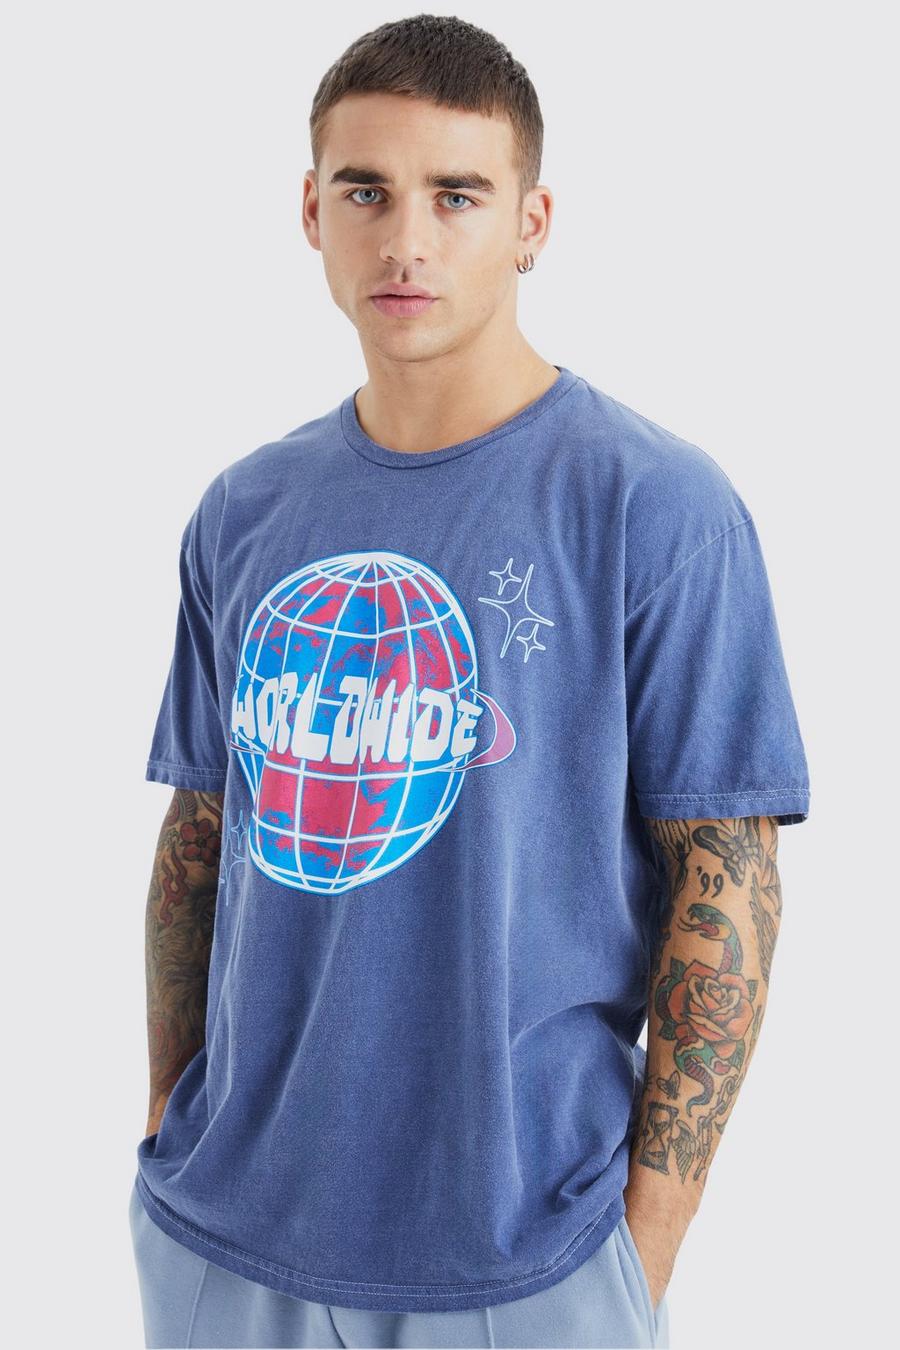 T-shirt oversize in lavaggio con grafica Worldwide, Navy